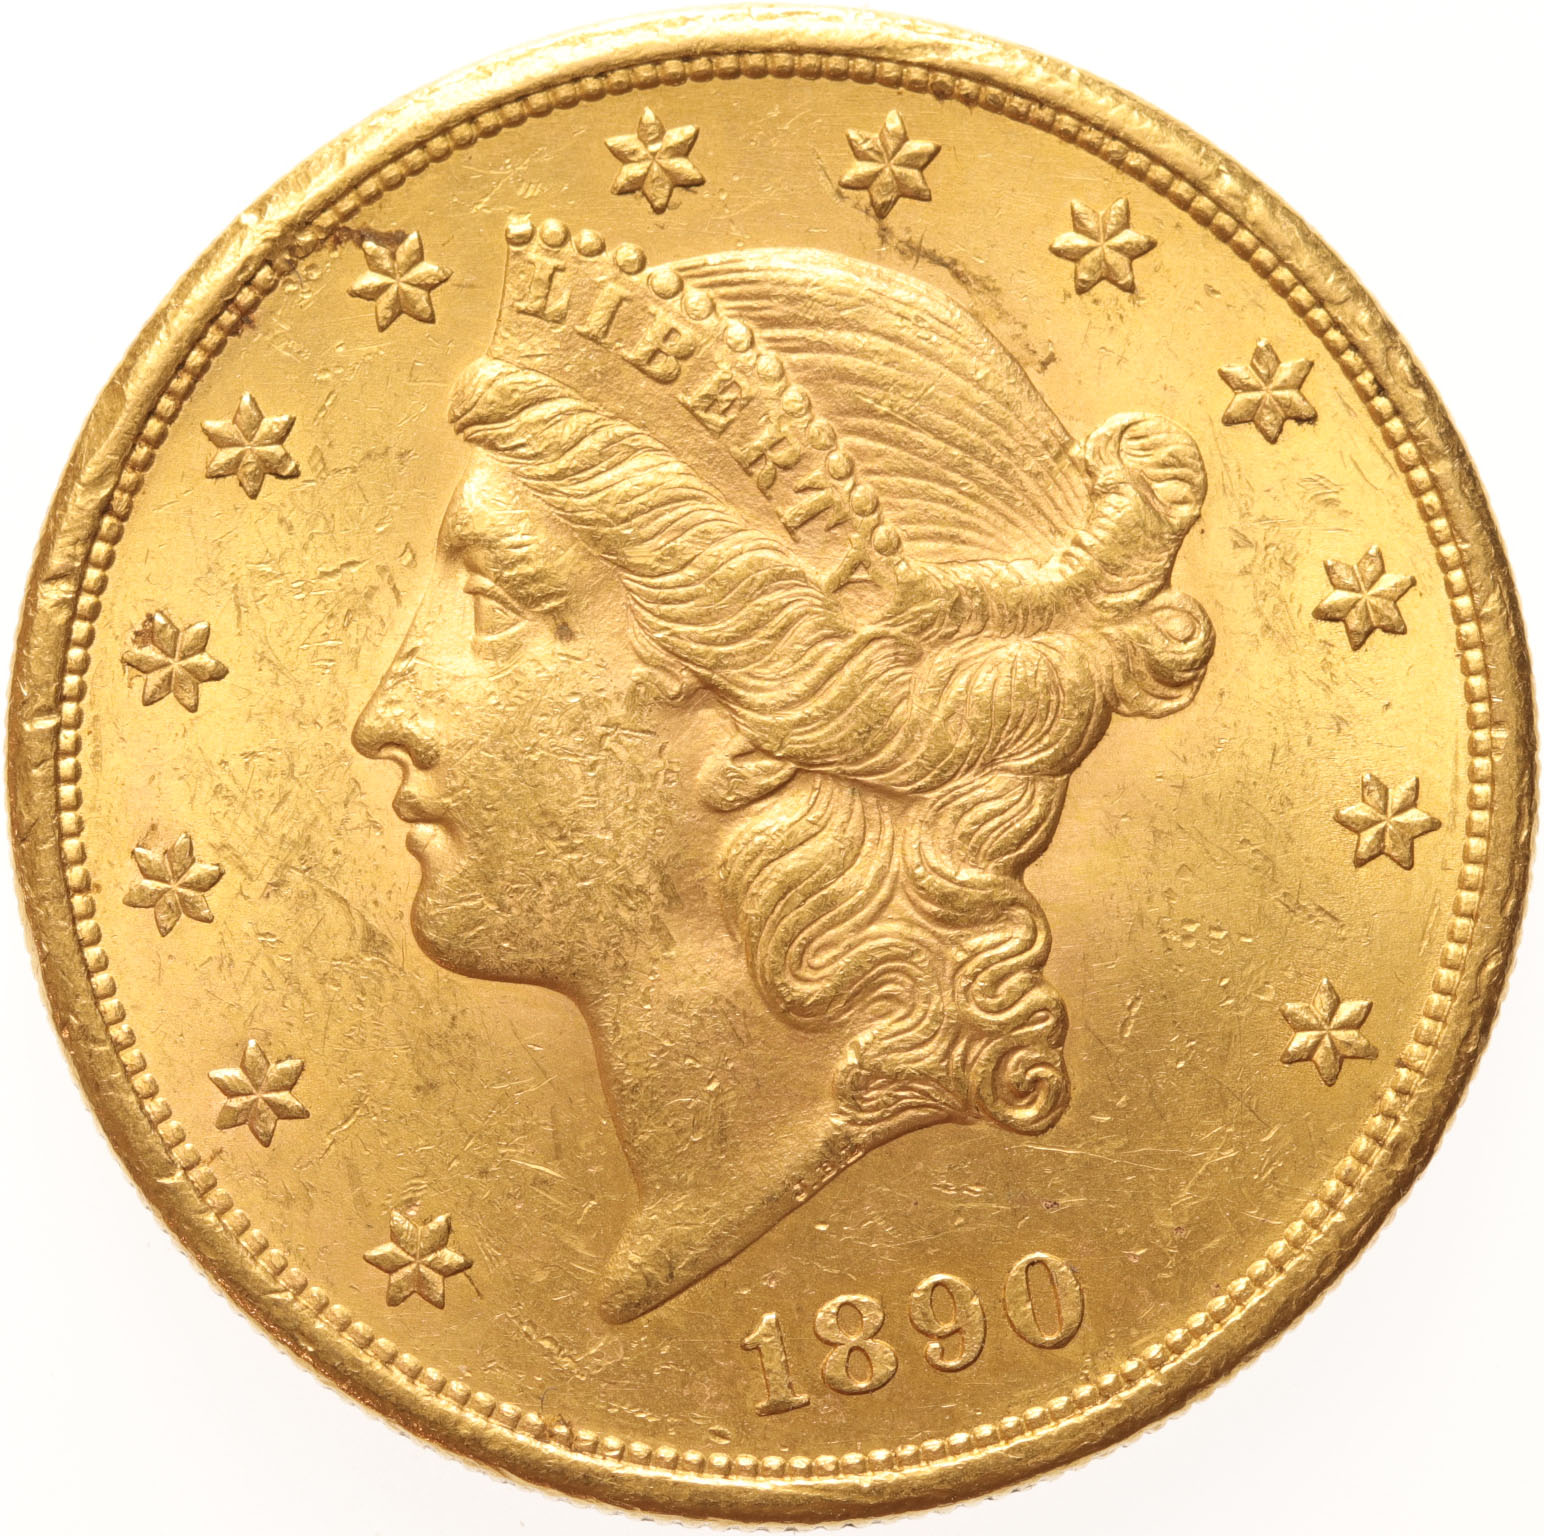 USA 20 dollars 1890s